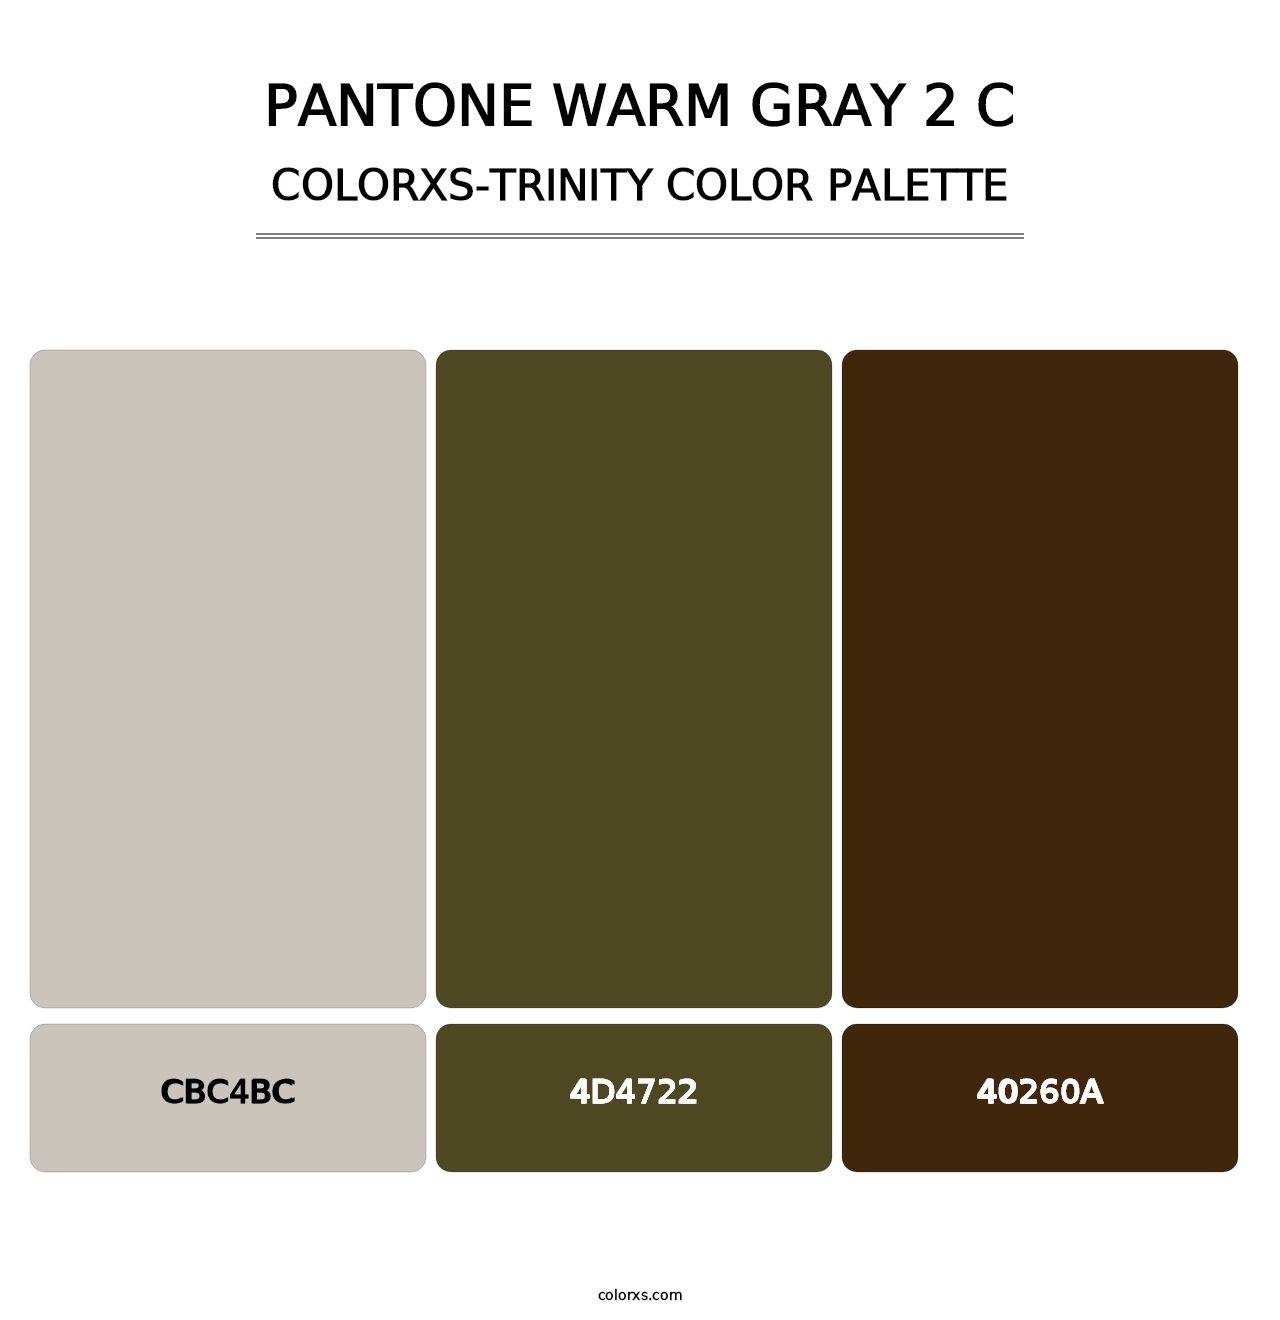 PANTONE Warm Gray 2 C - Colorxs Trinity Palette